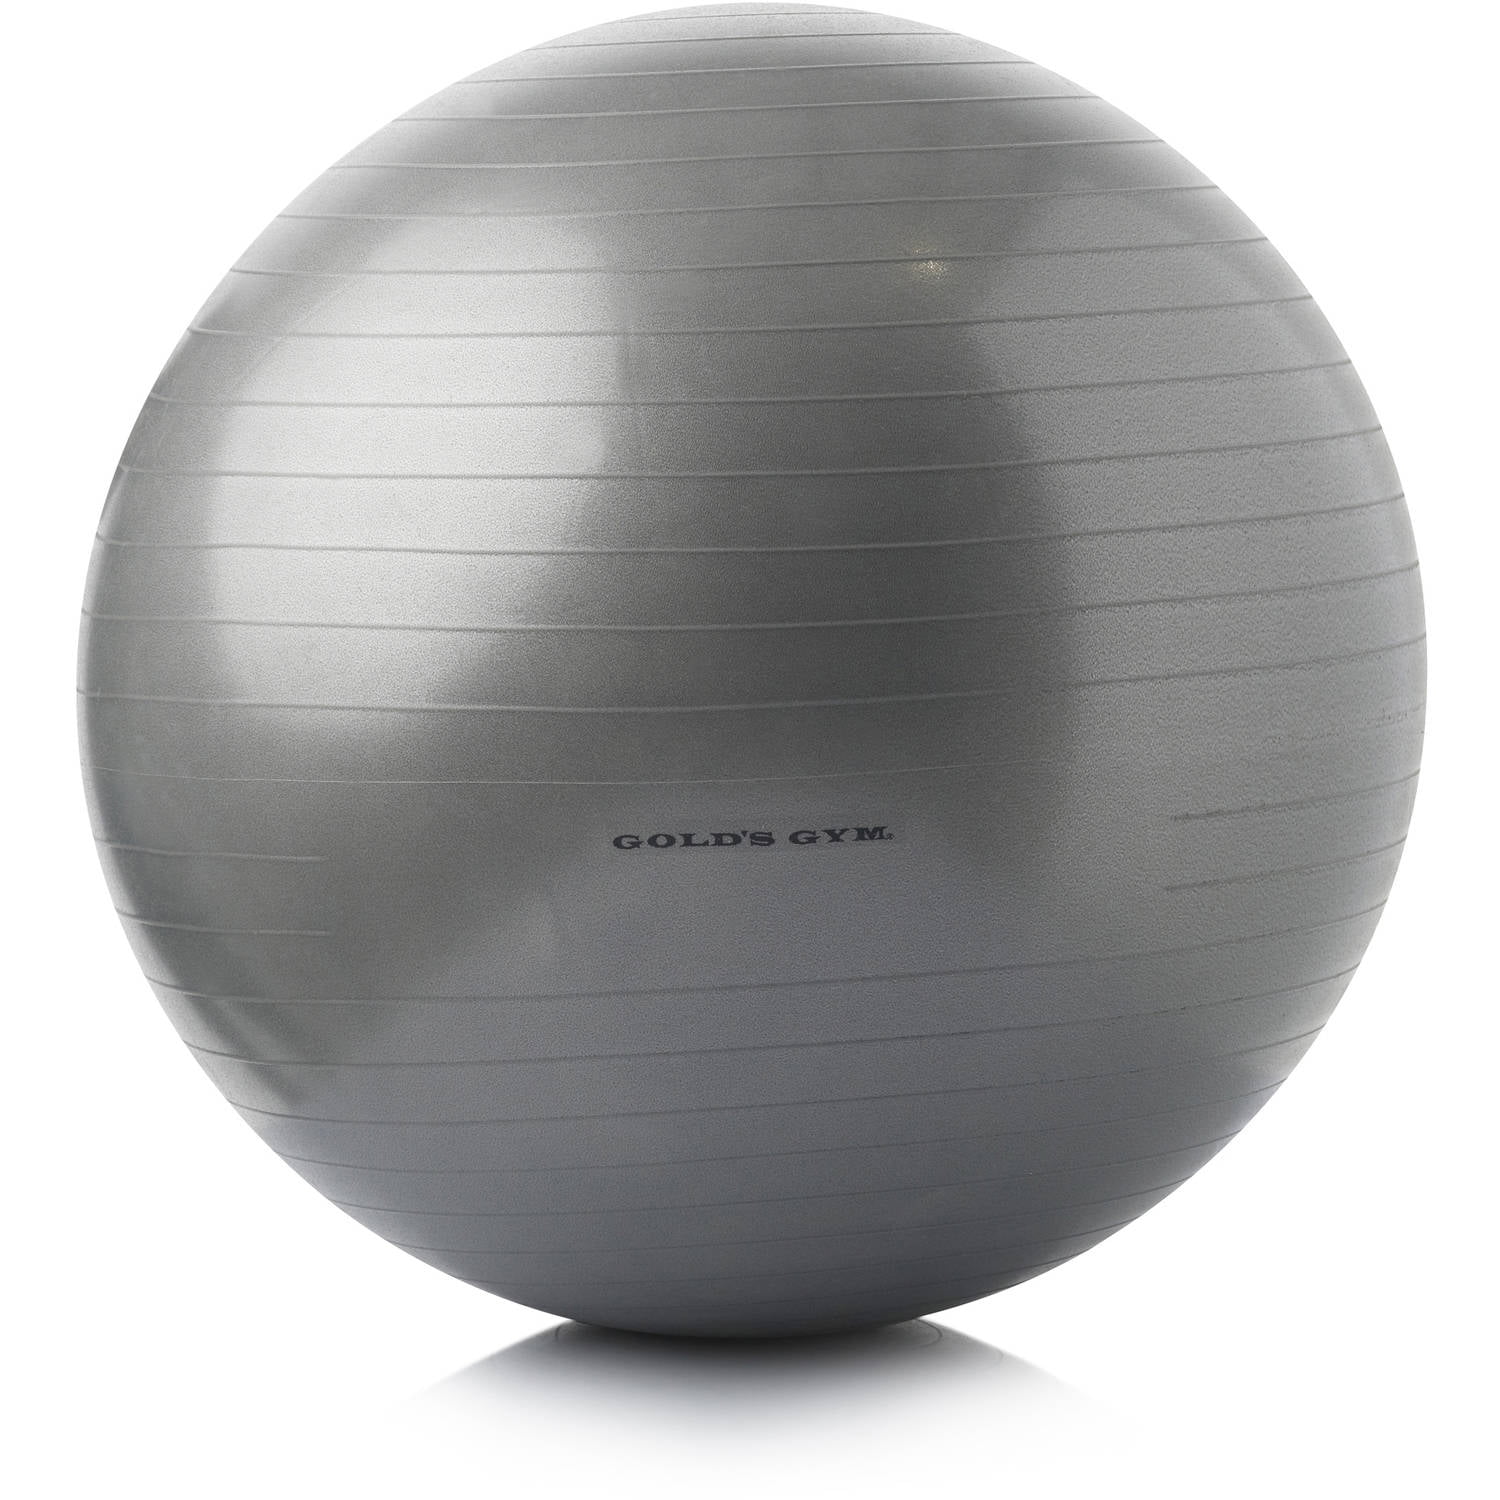 24 28 36" Yoga Ball Exercise Anti Burst Fitness Balance Workout Stability W Pump 